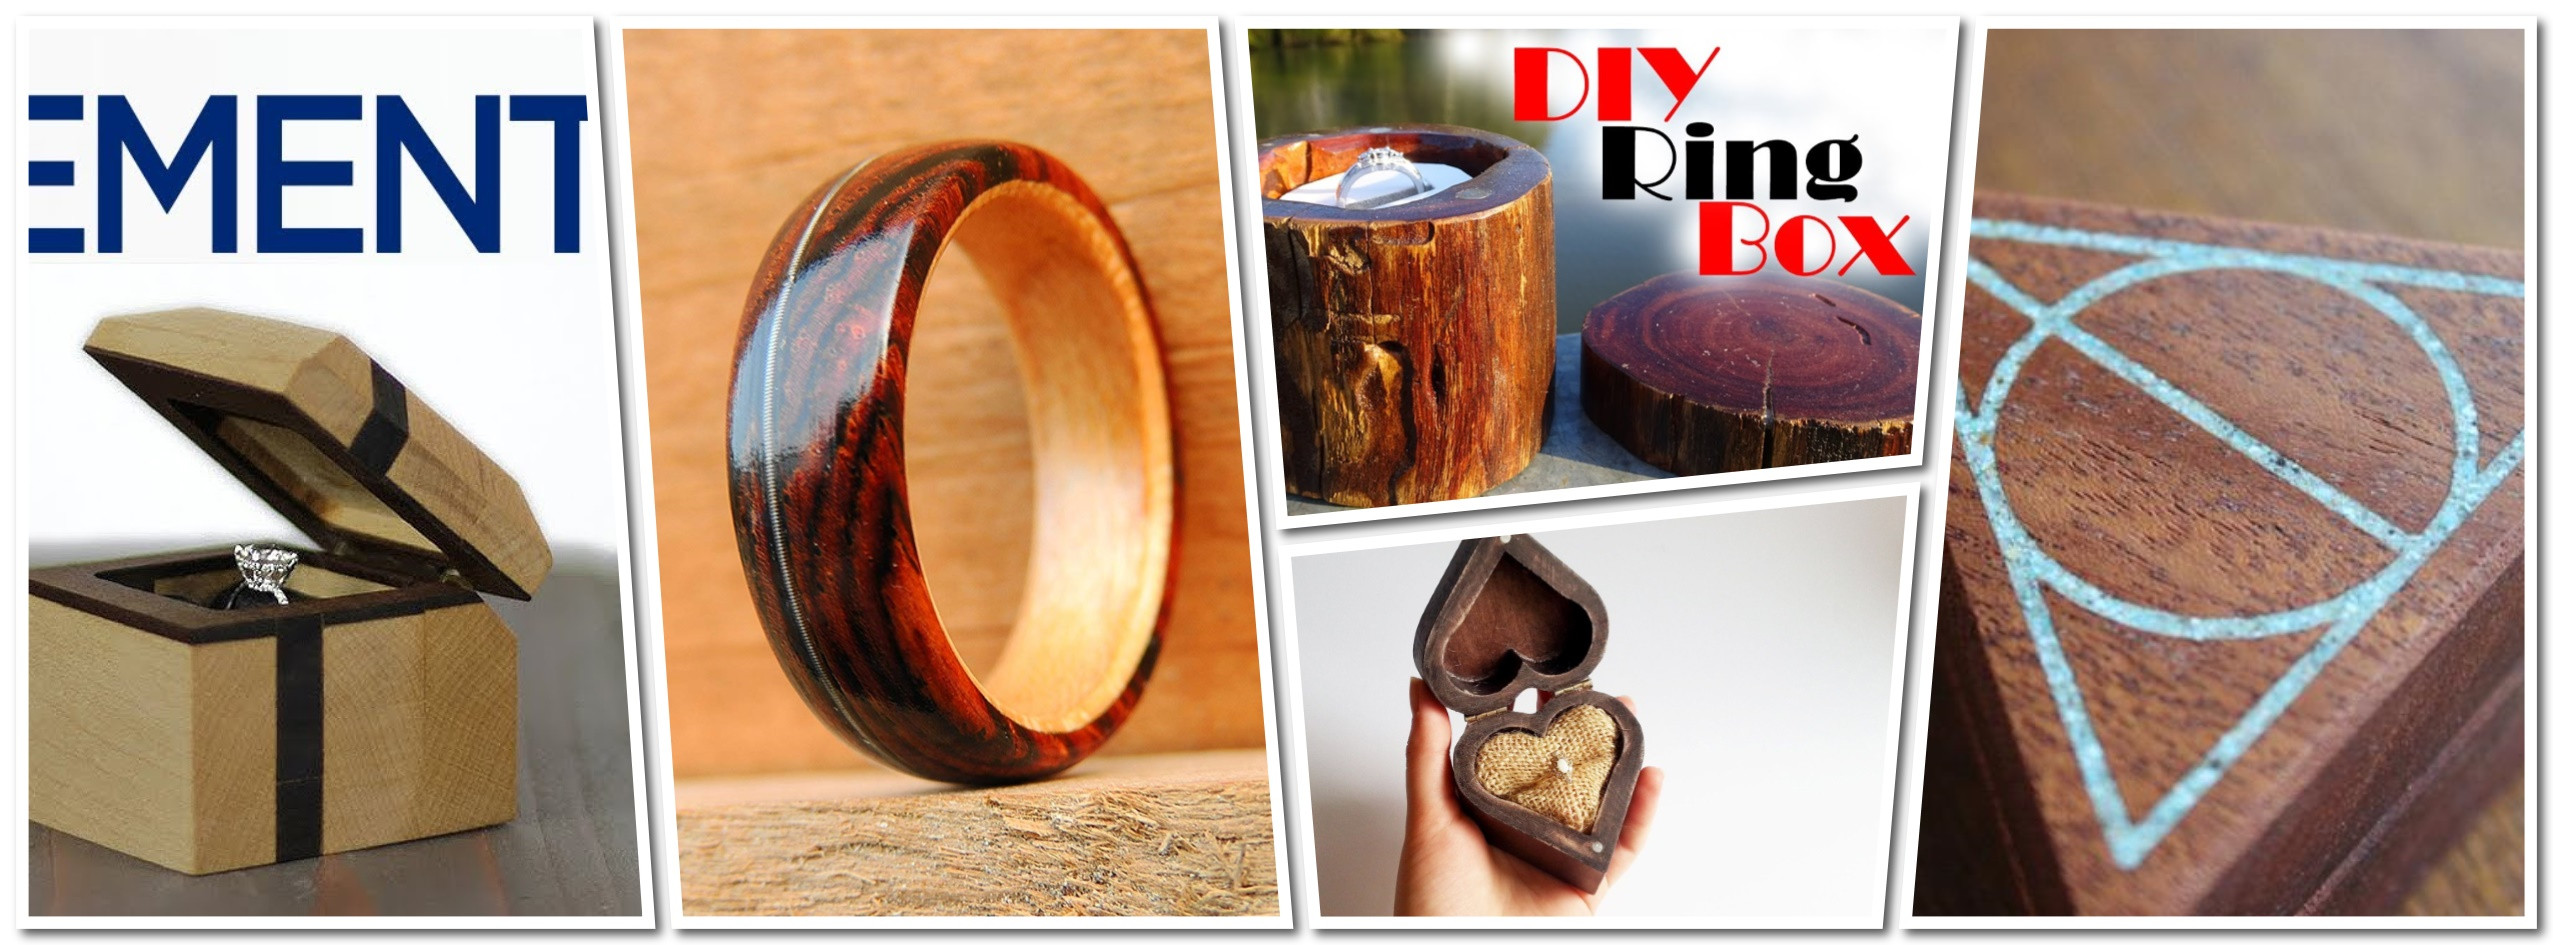 DIY Engagement Ring Box
 5 DIY Wood Engagement Ring Box Ideas Make Cents Woodworking